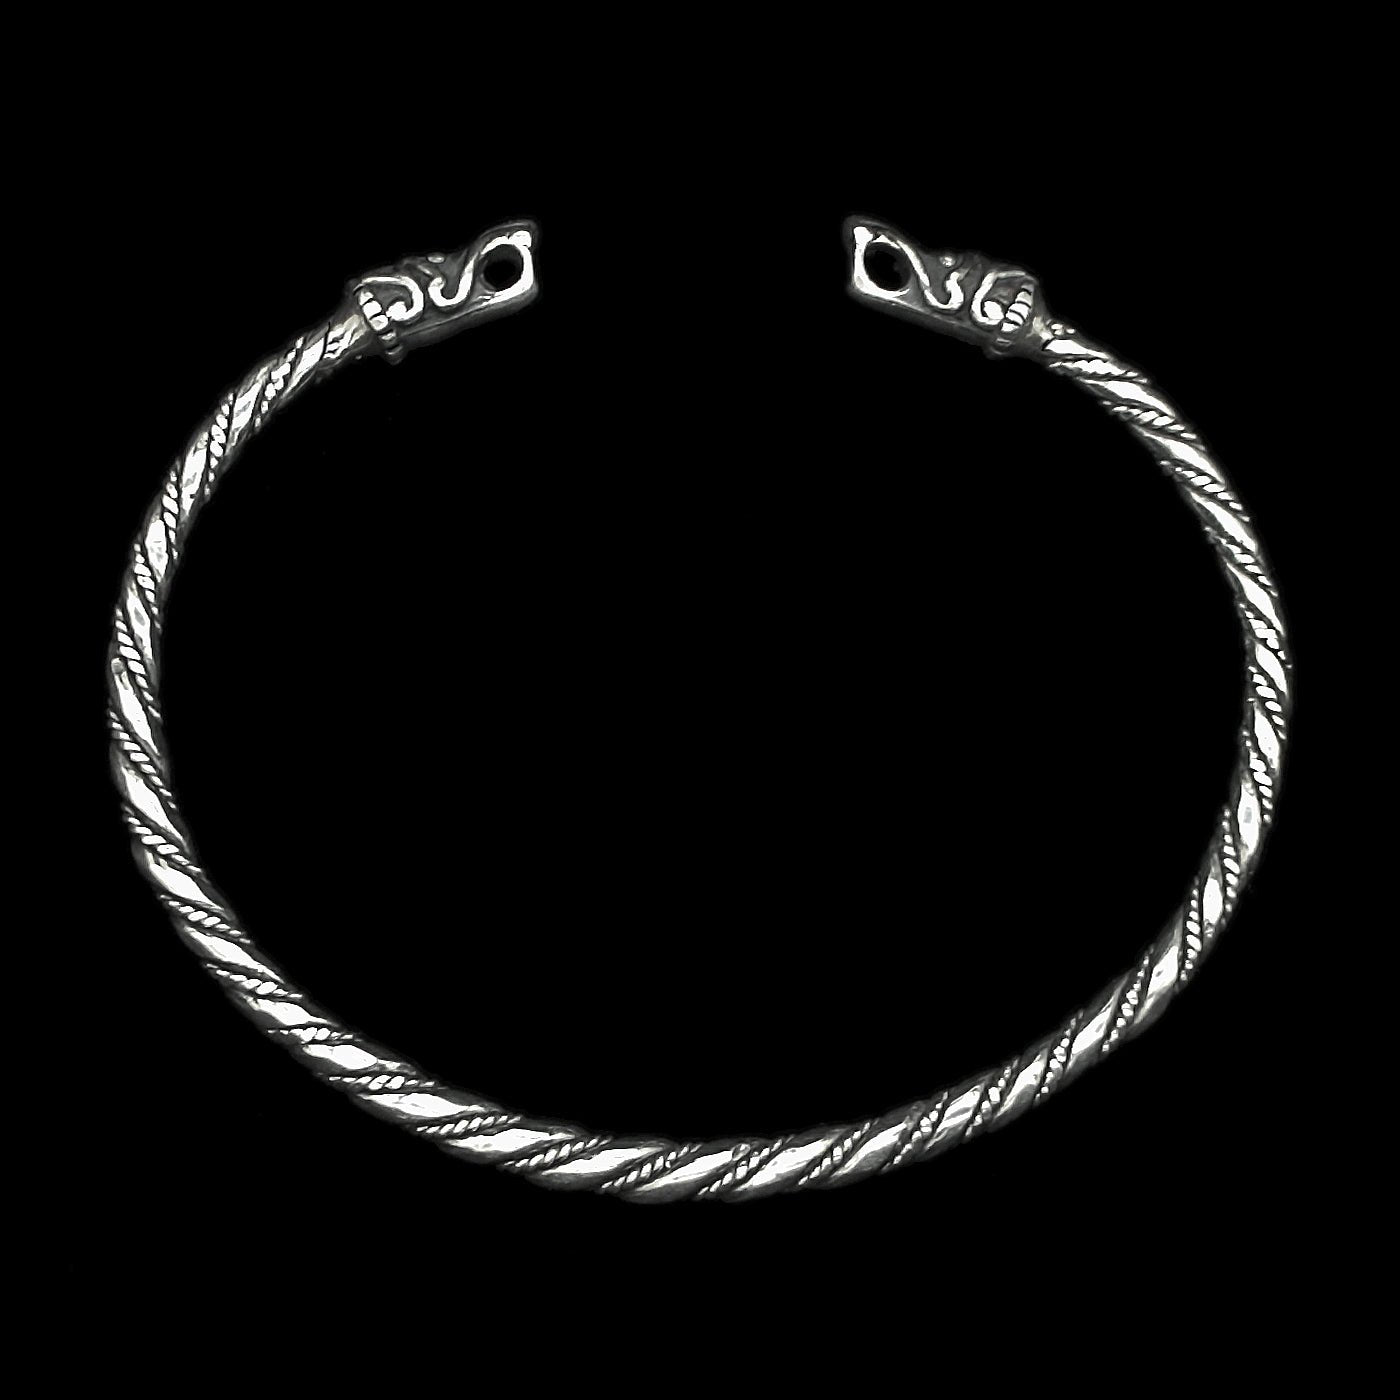 Slim Twisted Silver Bracelet With Gotlandic Dragon Heads